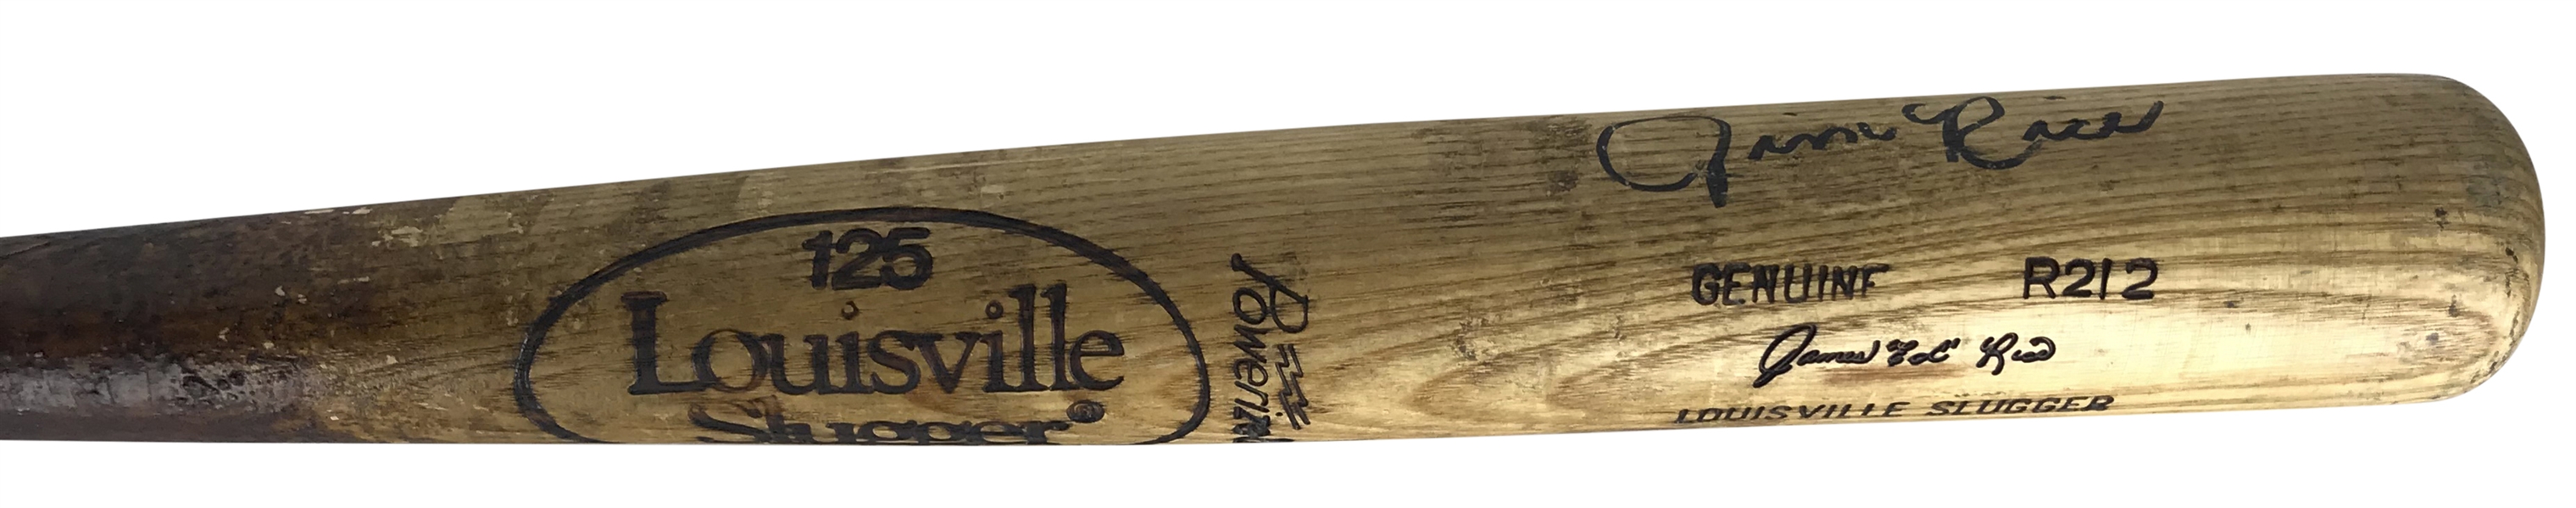 Jim Rice Game Used & Signed 1980-83 R212 Baseball Bat PSA/DNA GU 10!